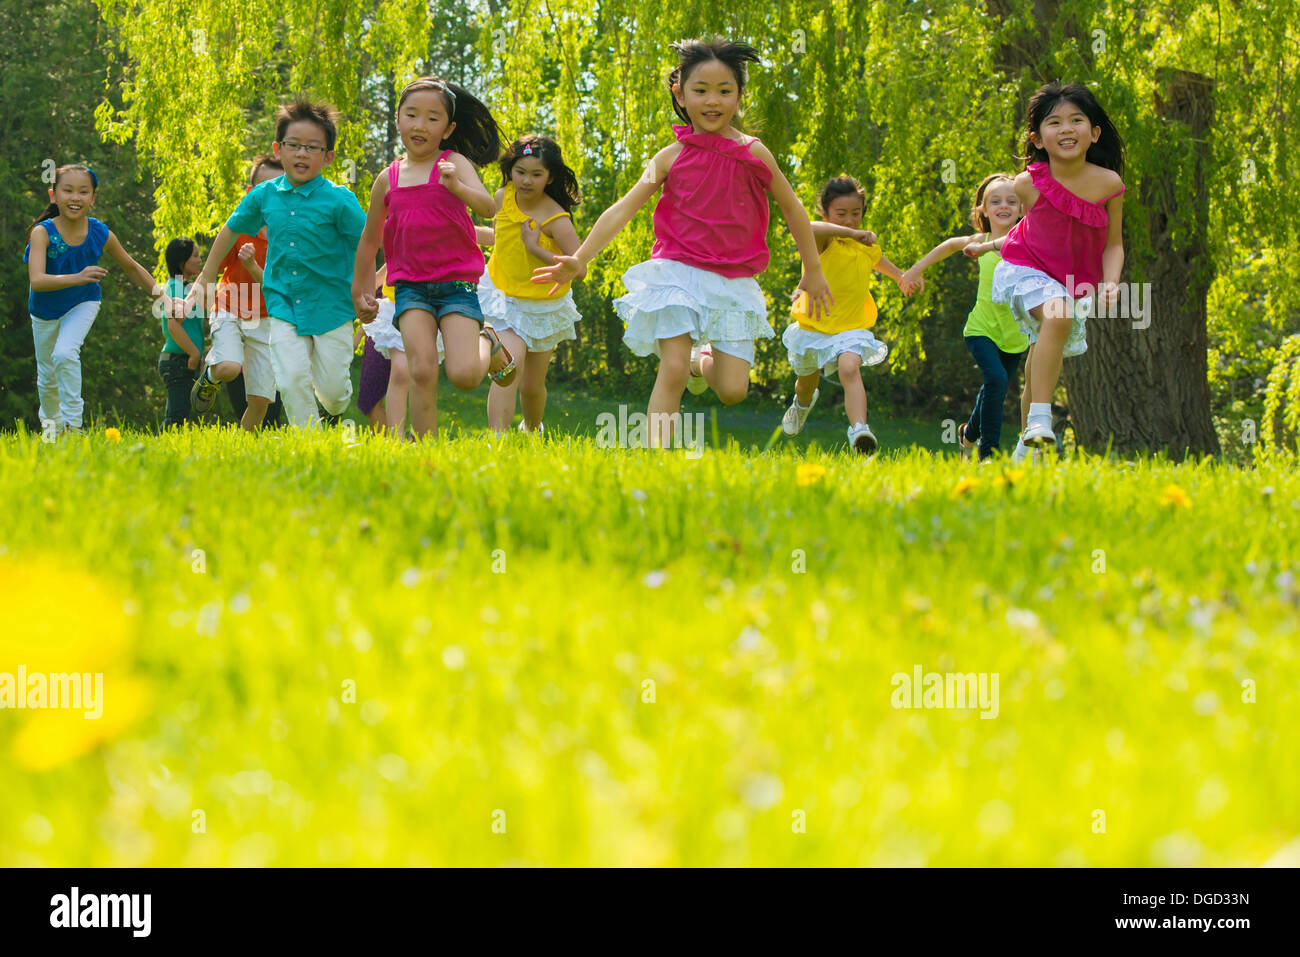 Children running on grass Banque D'Images